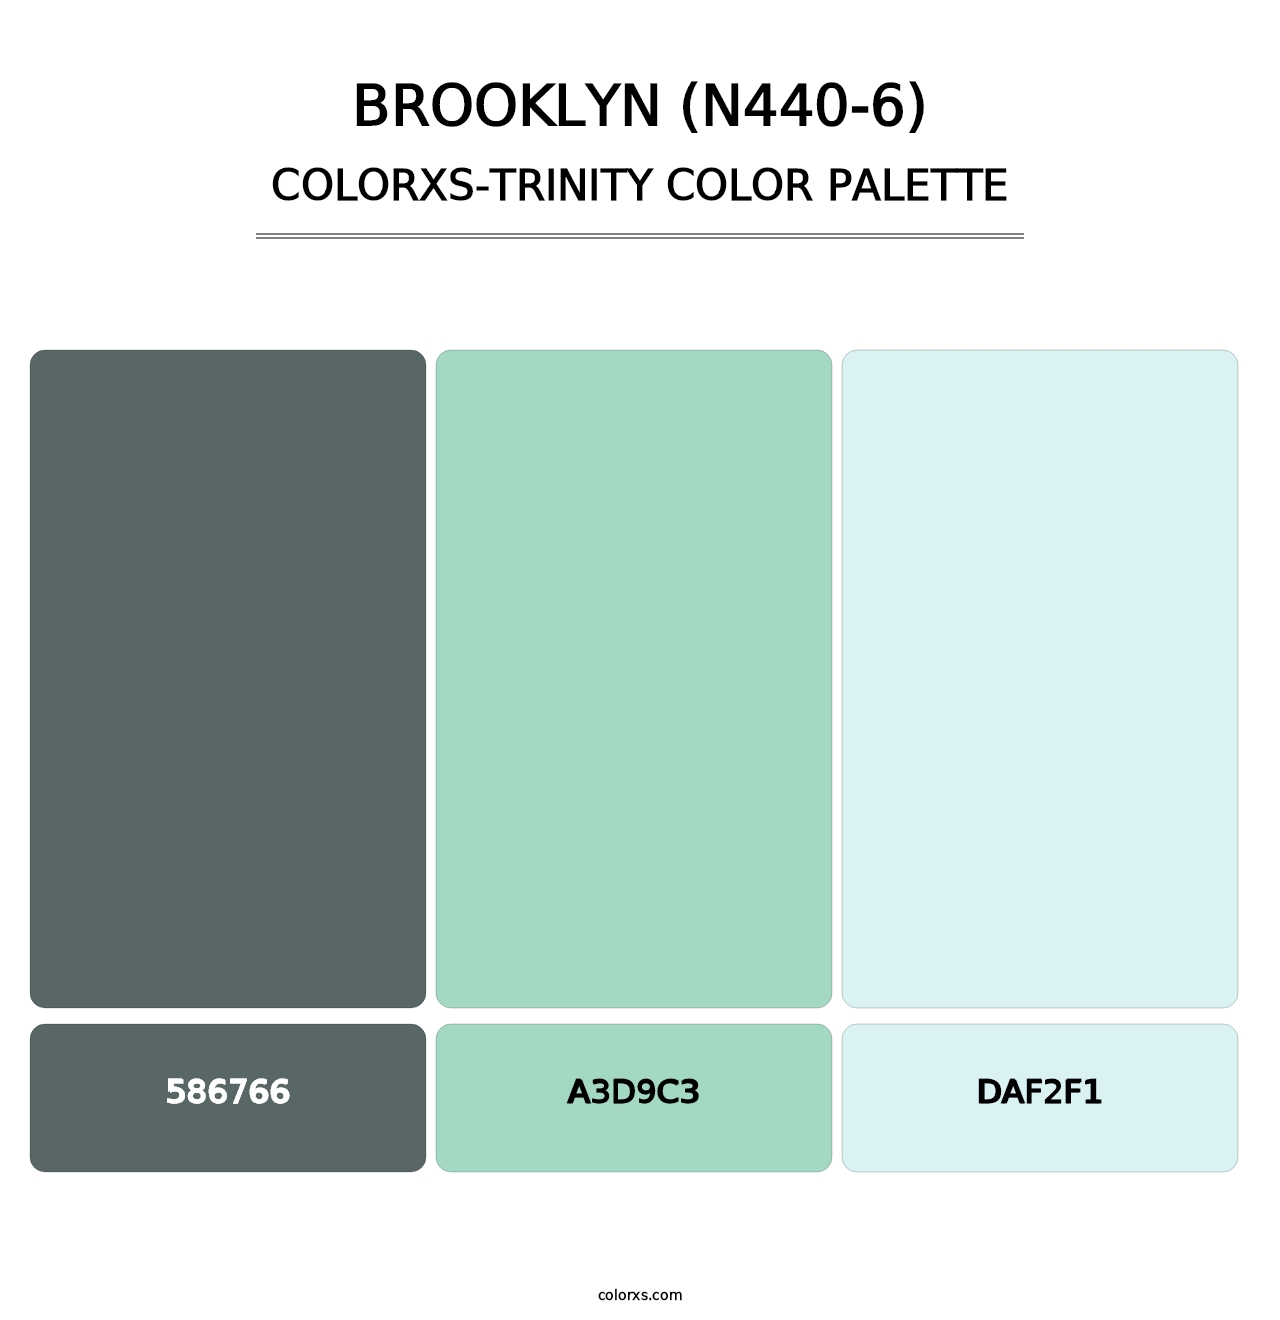 Brooklyn (N440-6) - Colorxs Trinity Palette